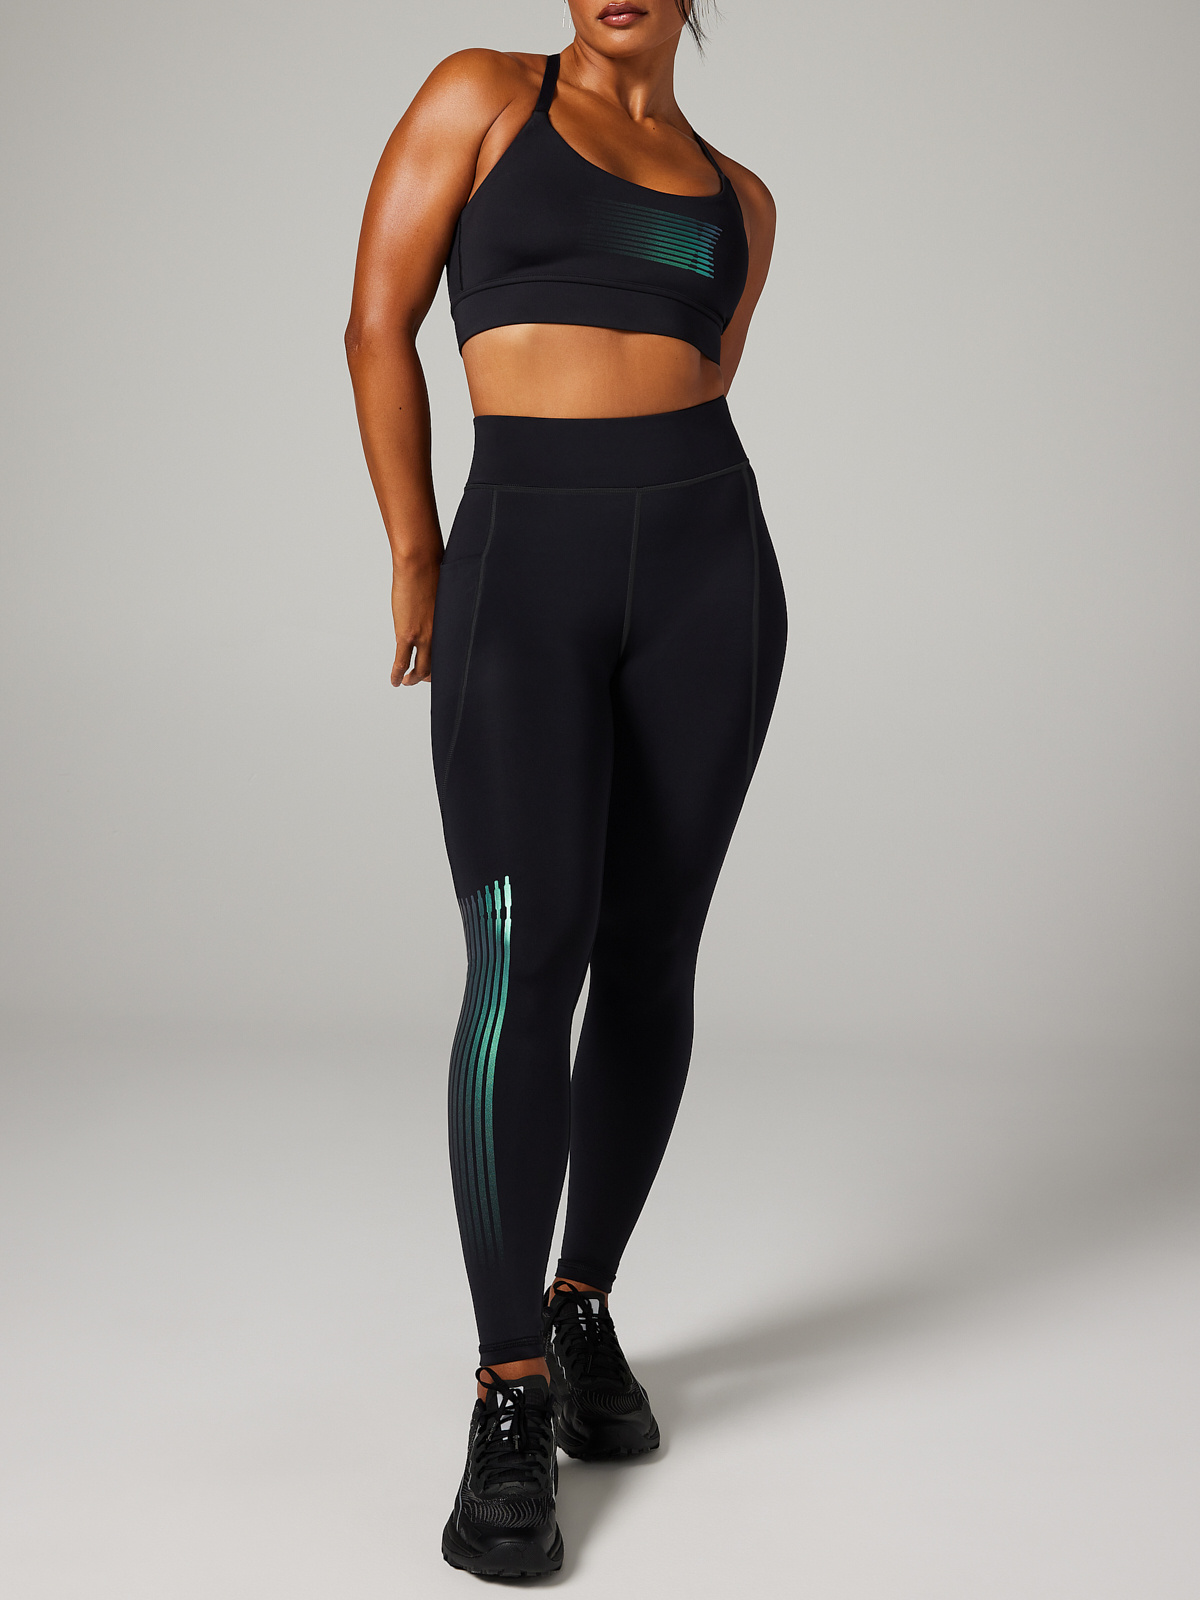 Women's Two-piece Activewear Set Banded Sport Bra